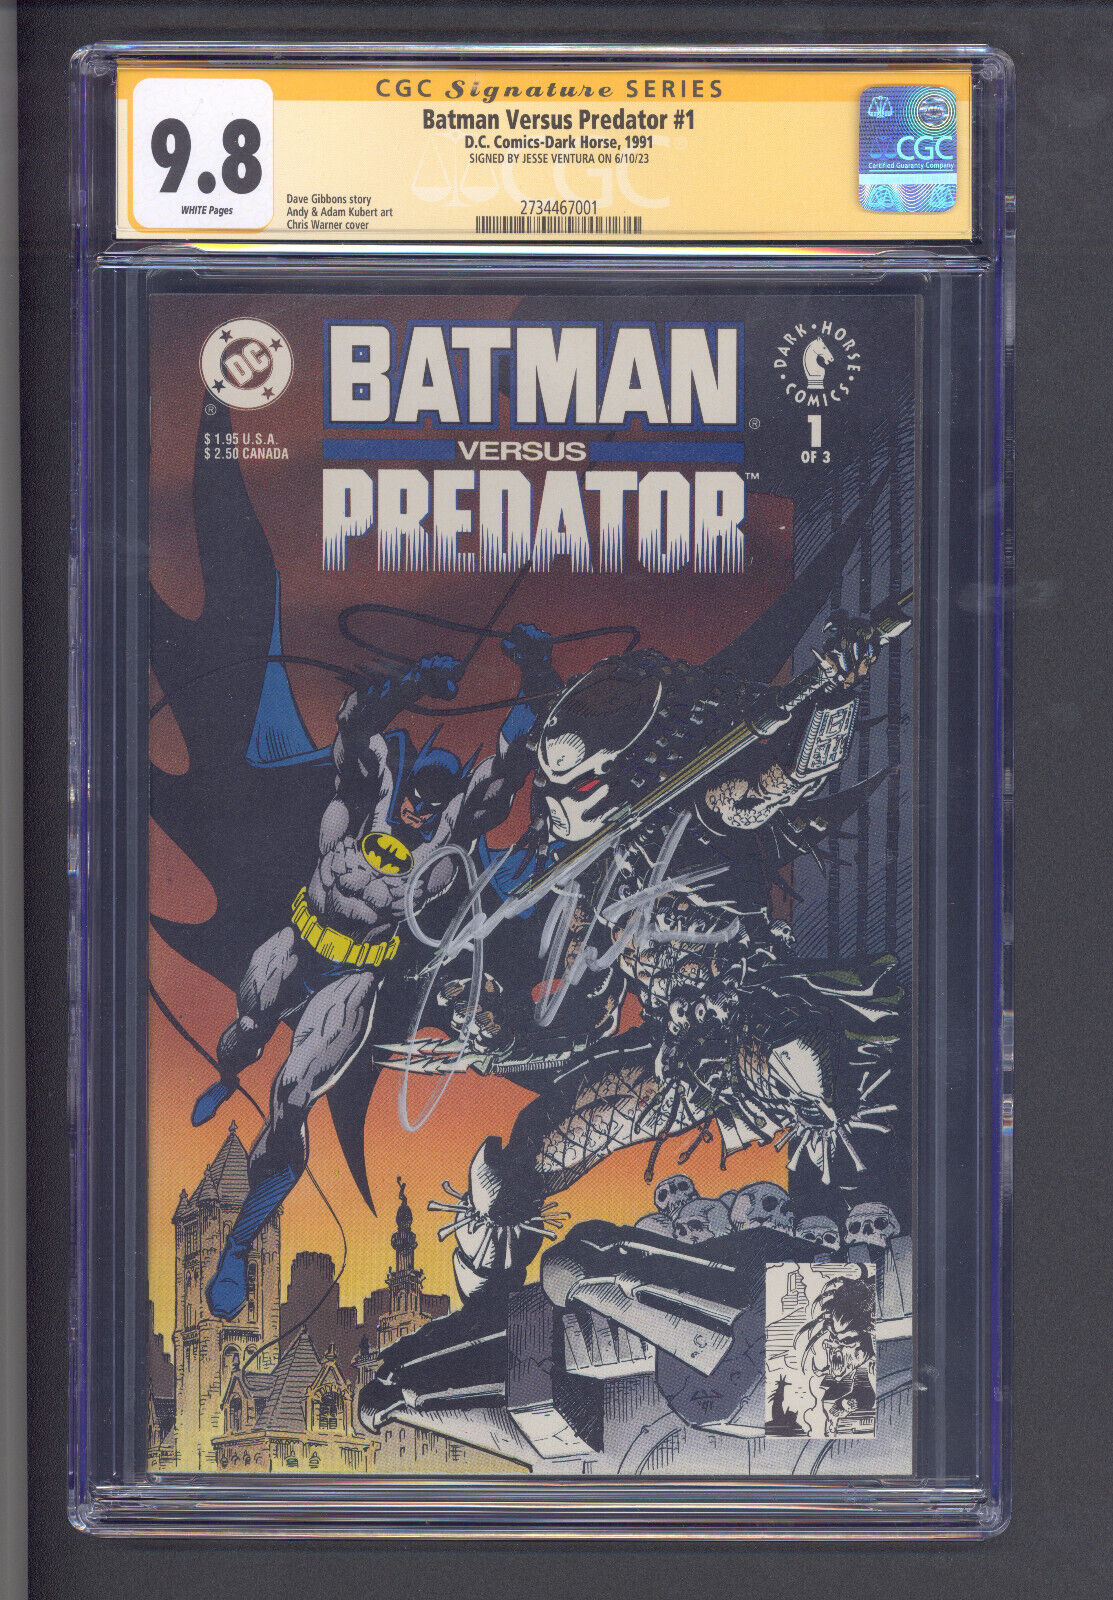 Batman Versus Predator #1 CGC 9.8 SS Jesse Ventura (Governor)